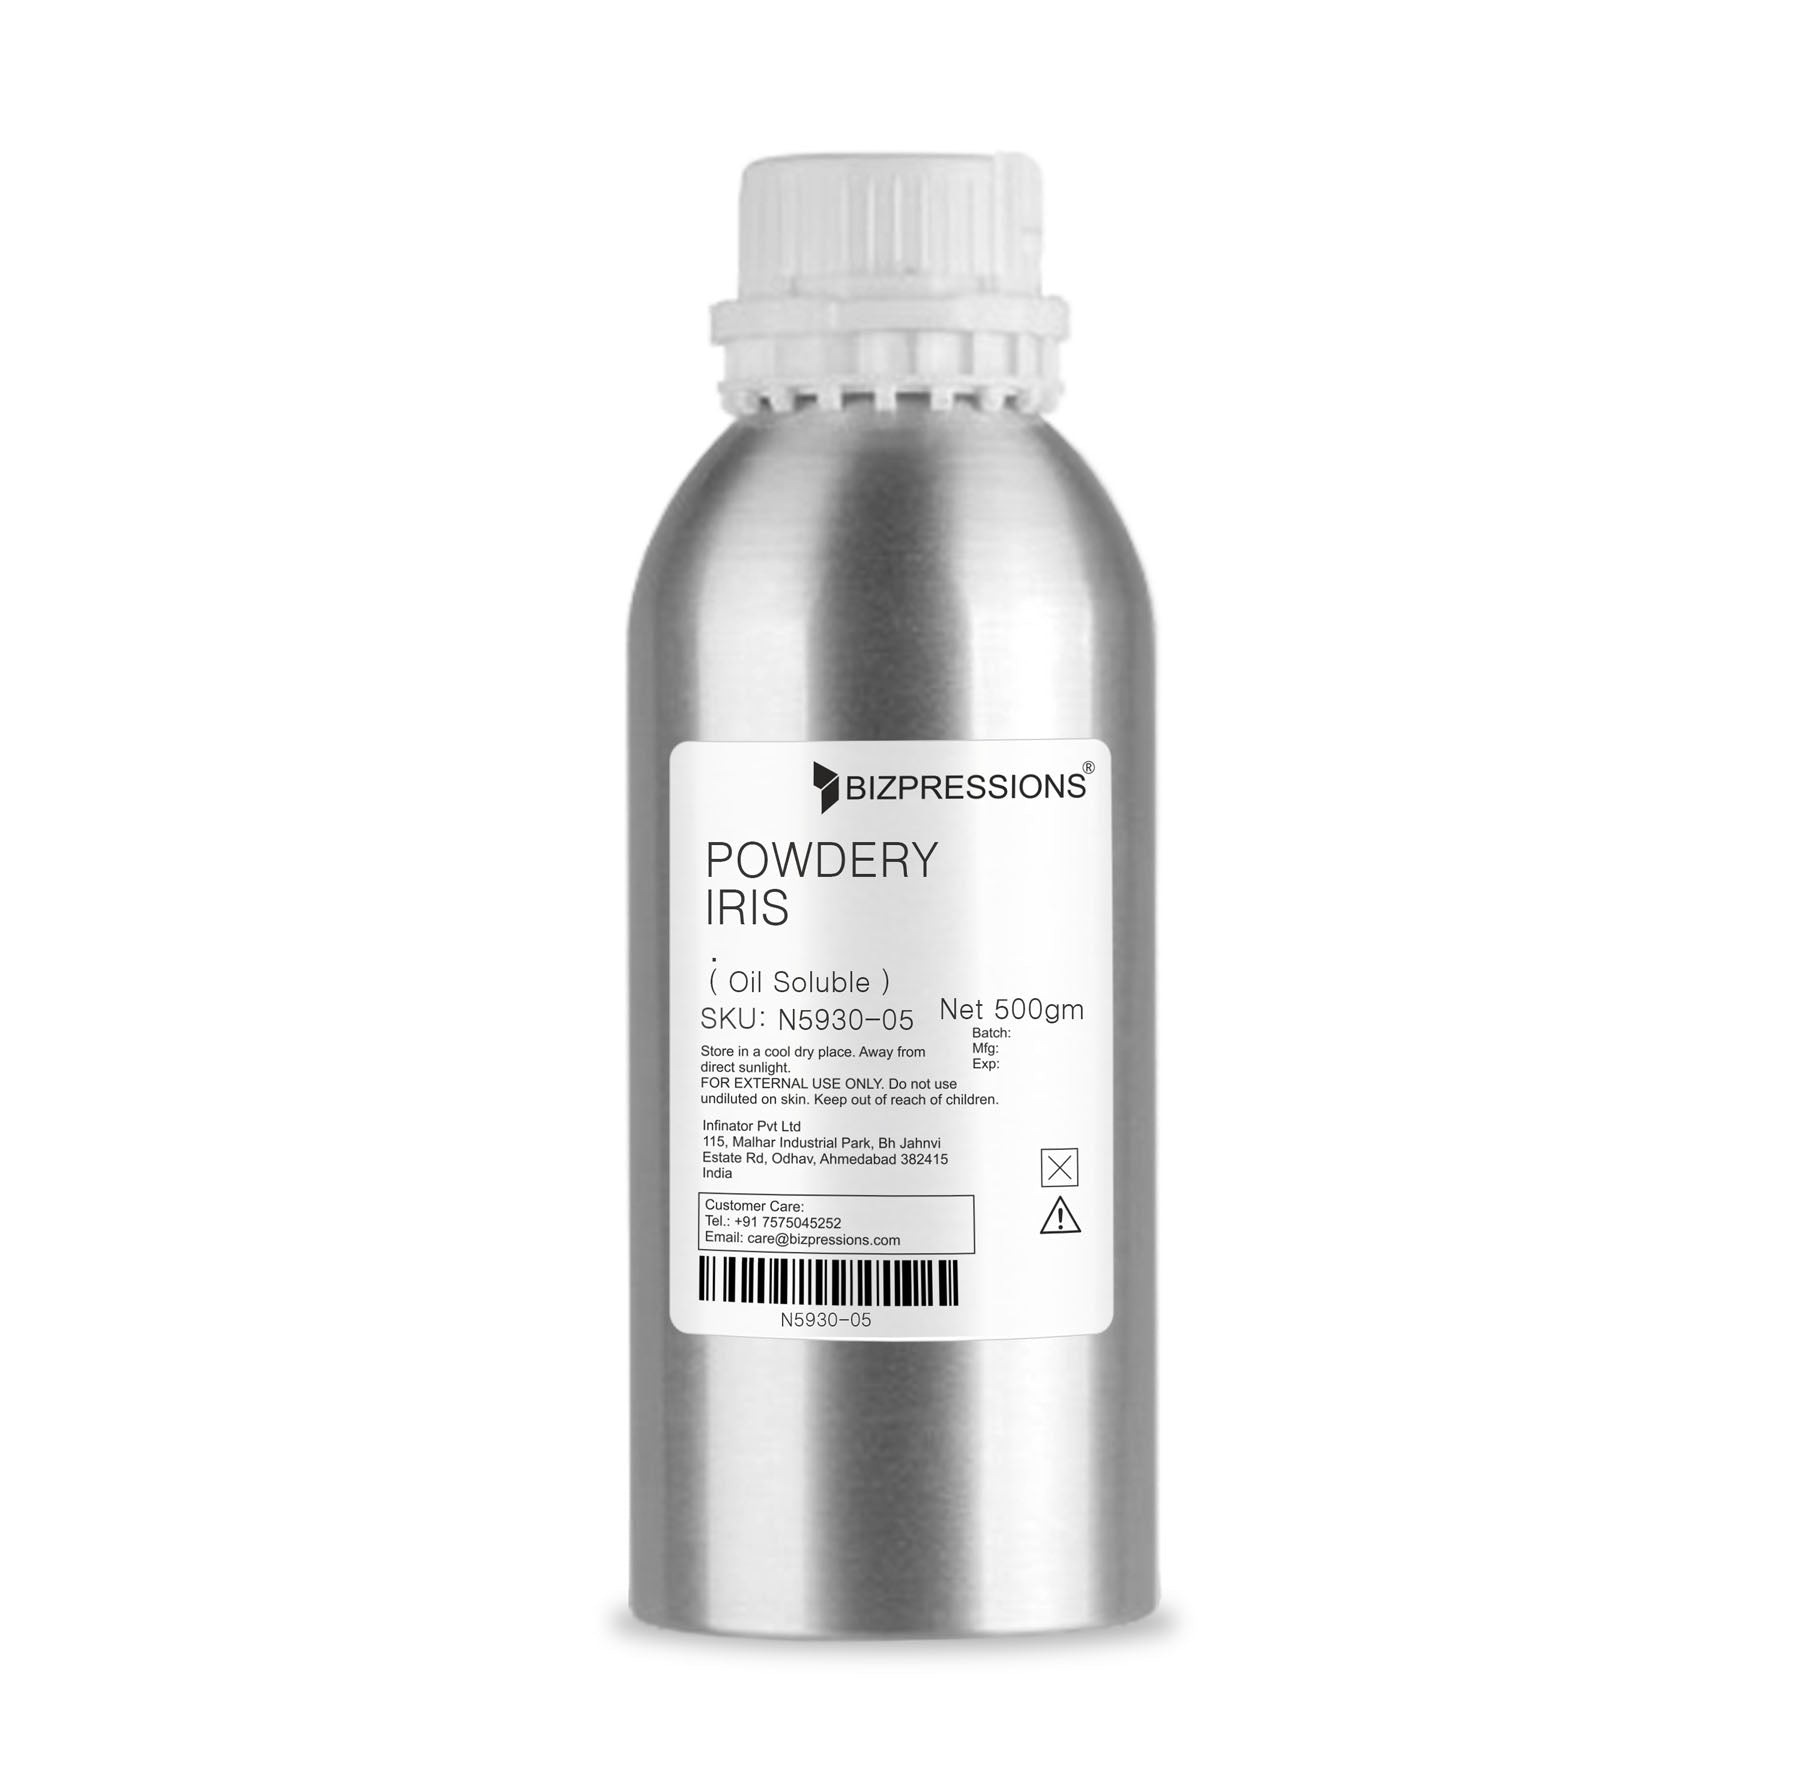 POWDERY IRIS - Fragrance ( Oil Soluble ) - 500 gm